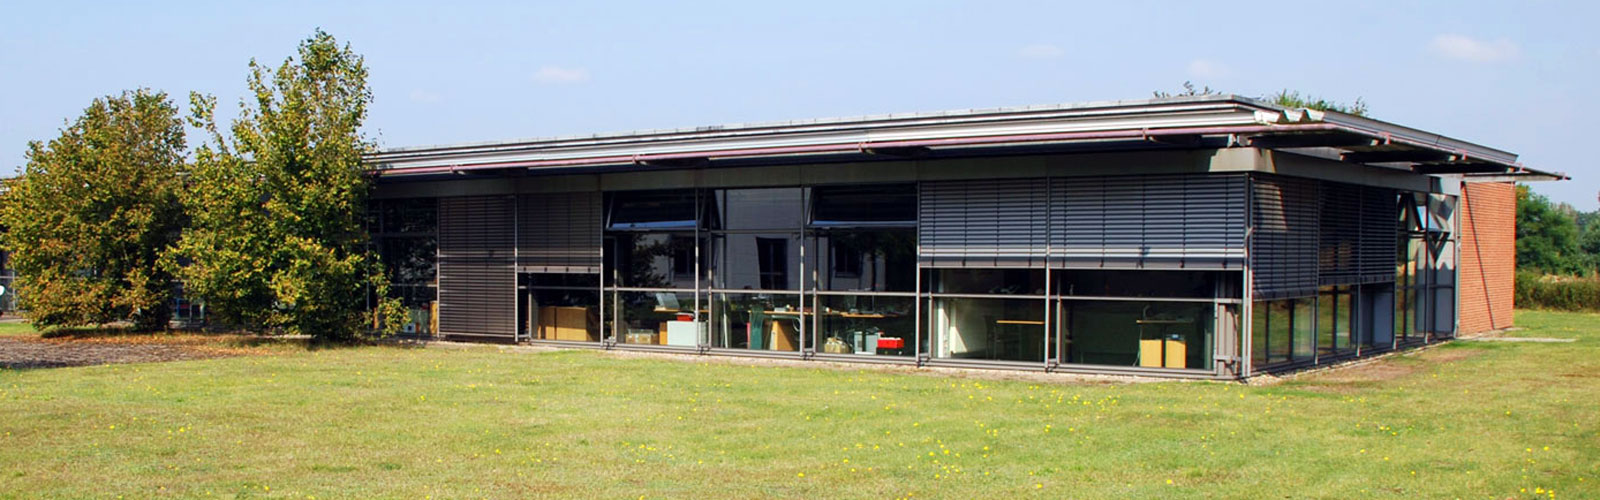 RK-AHT company building located in Bienenbüttel